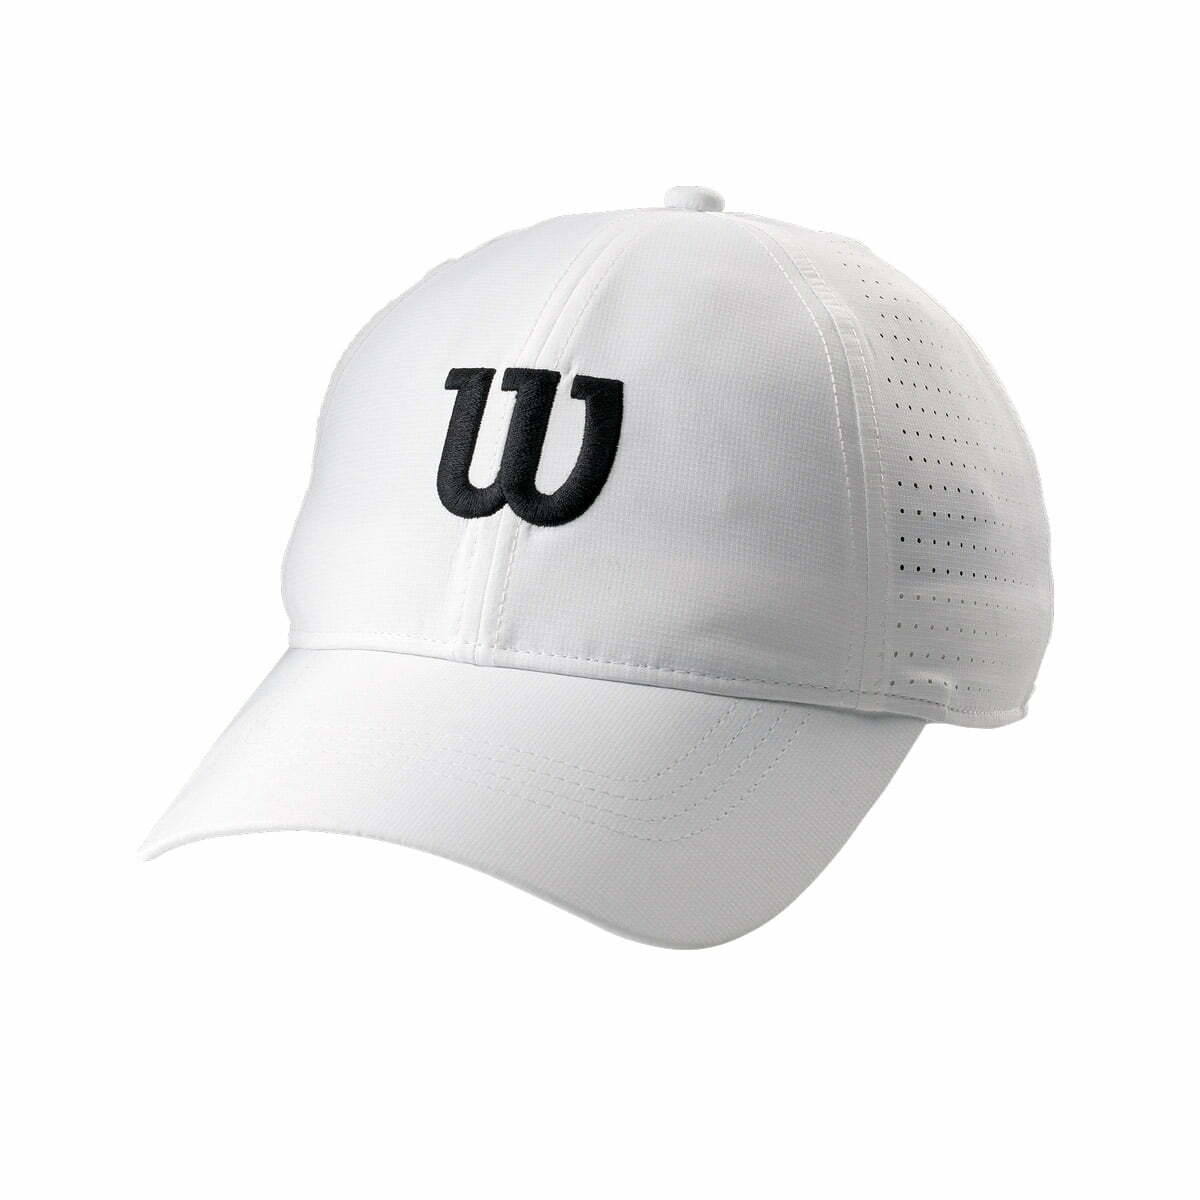 Wra777101 0 Ss19 Accessories Ultralight Tennis Cap U White Black Front.jpg